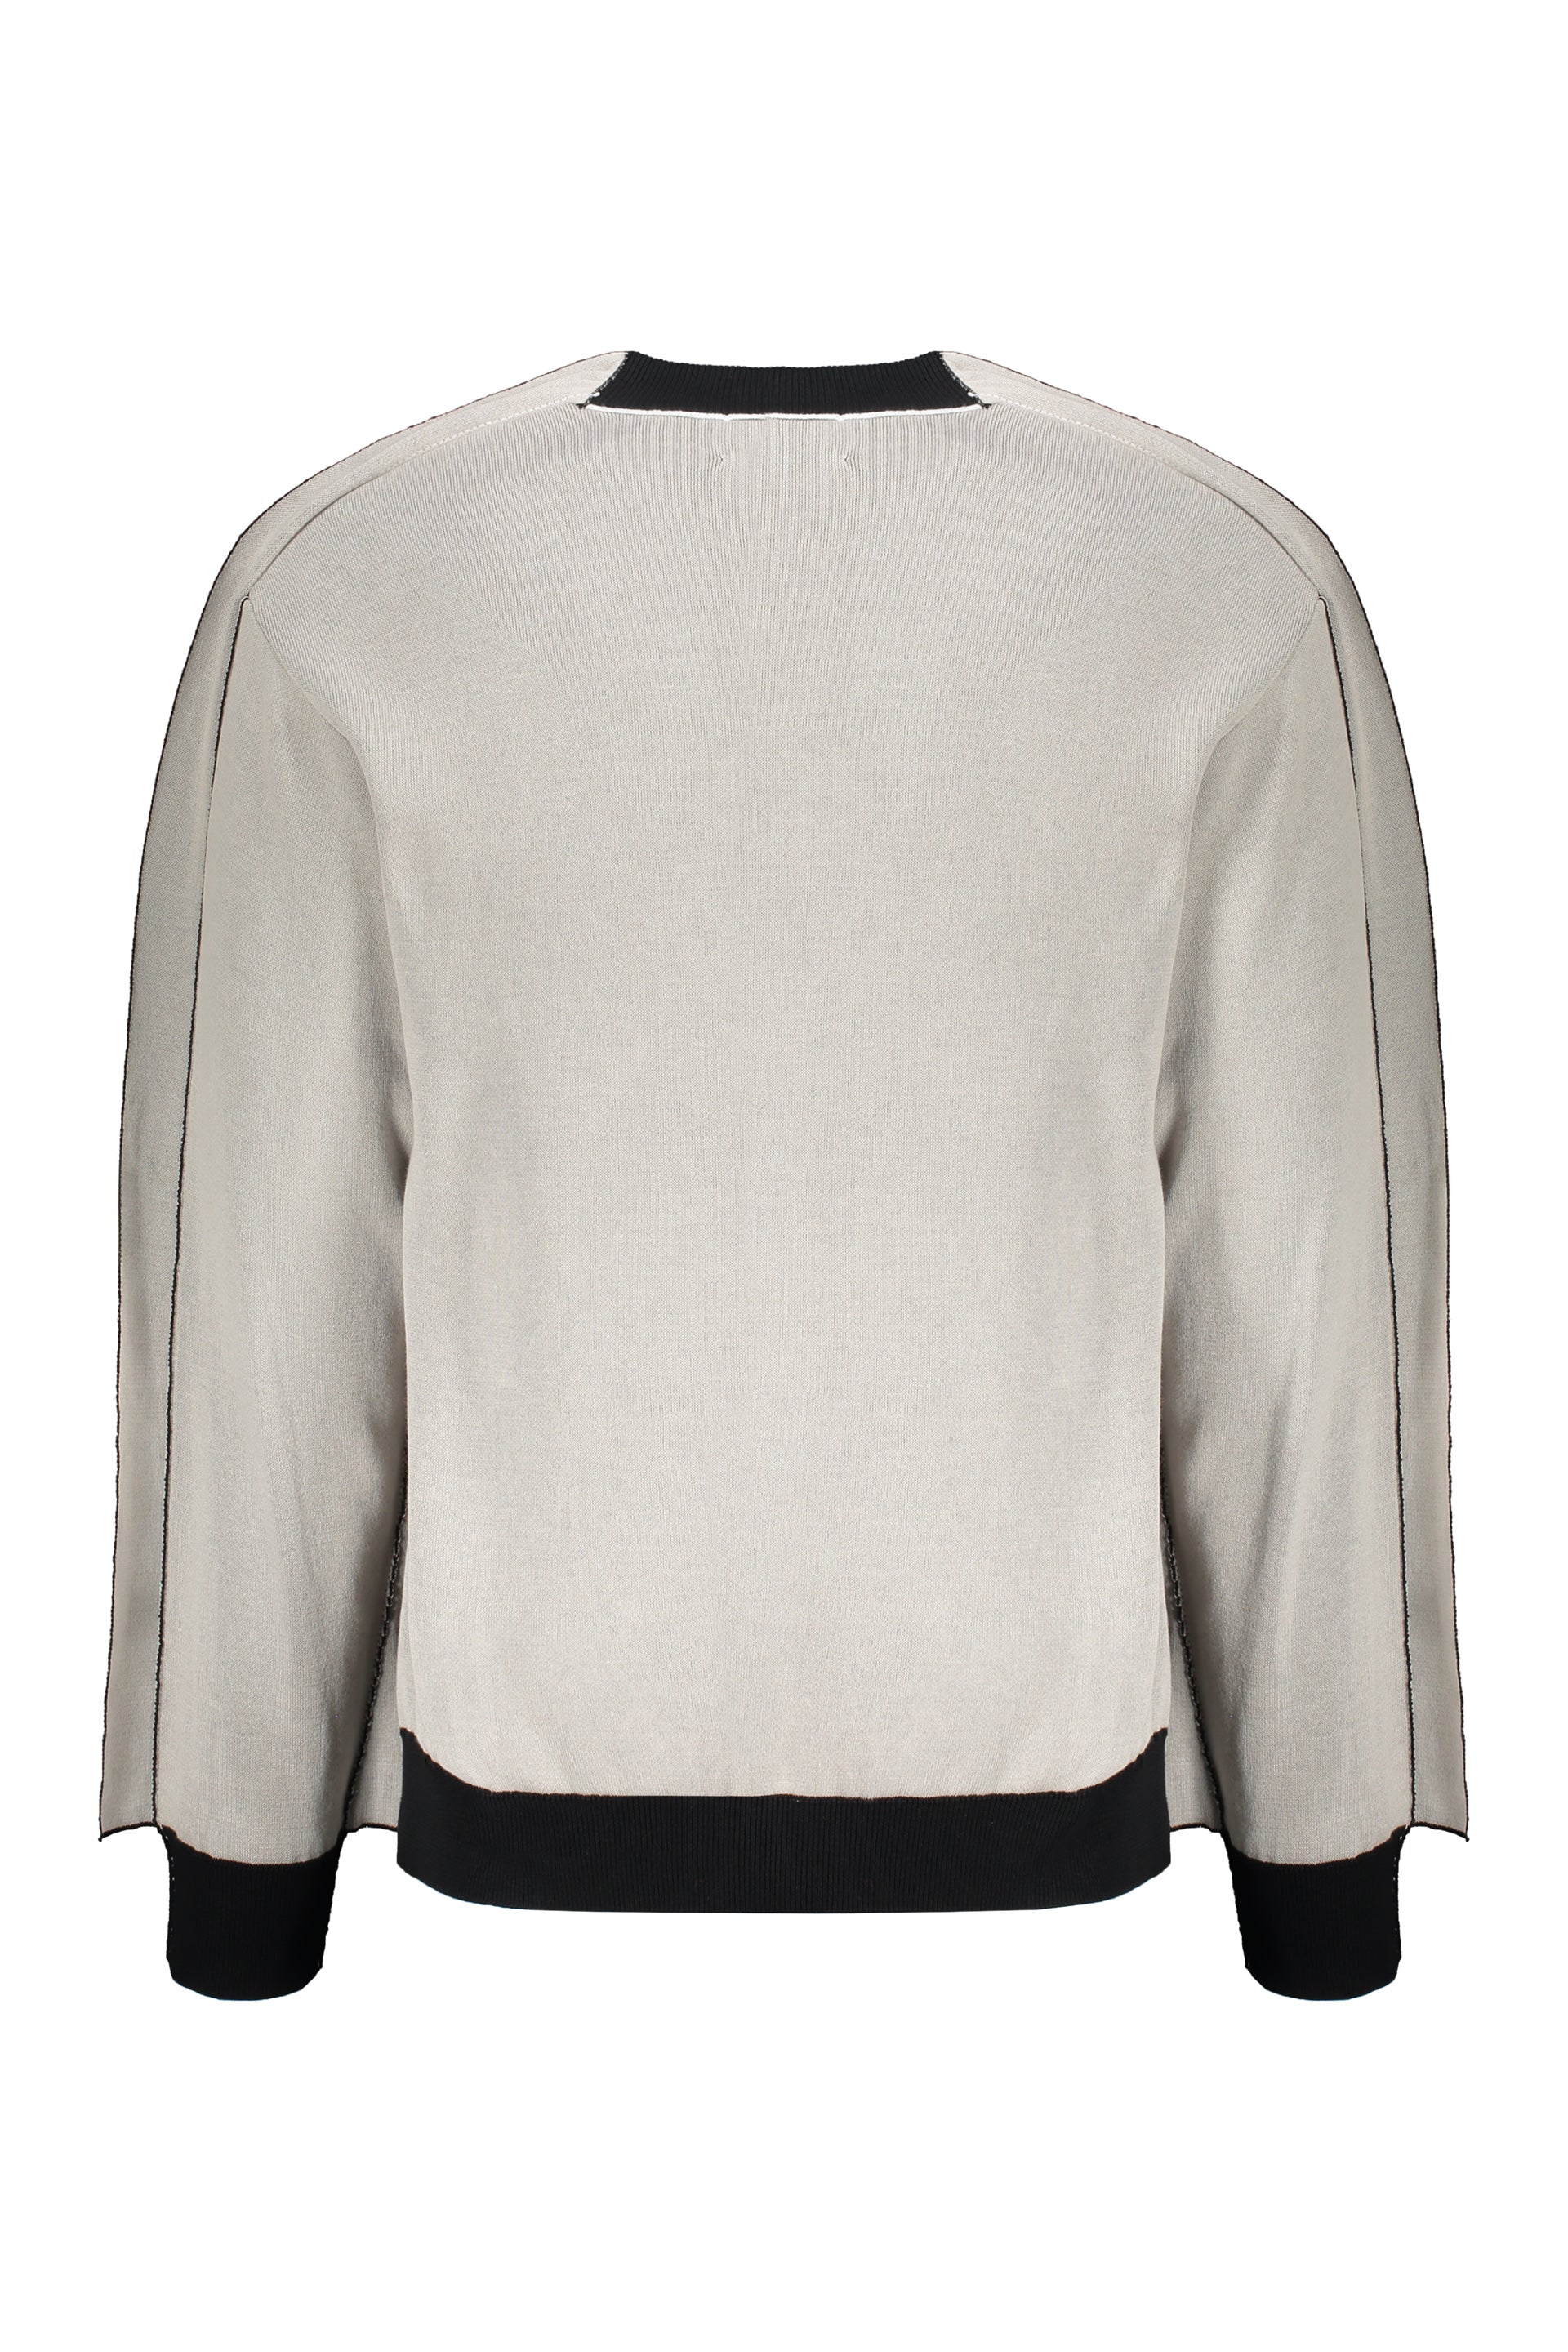 AMBUSH-OUTLET-SALE-Crew-neck-sweater-Strick-M-ARCHIVE-COLLECTION-2.jpg